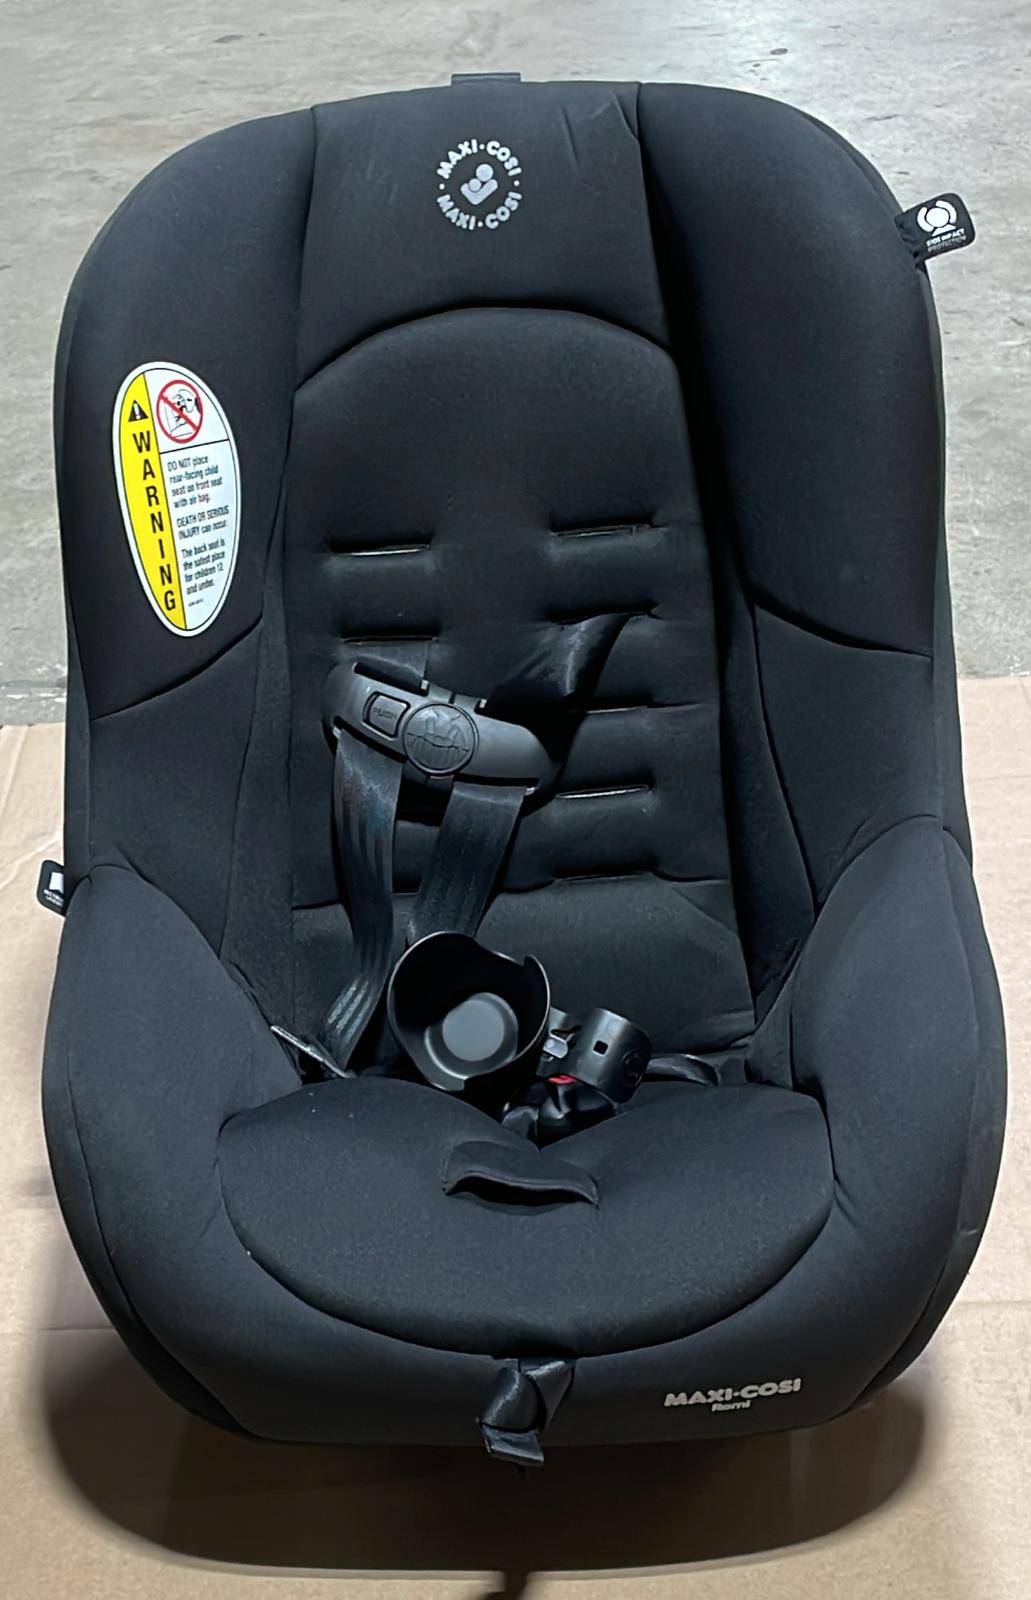 Maxi-Cosi Romi Convertible Car Seat (Essential Black)